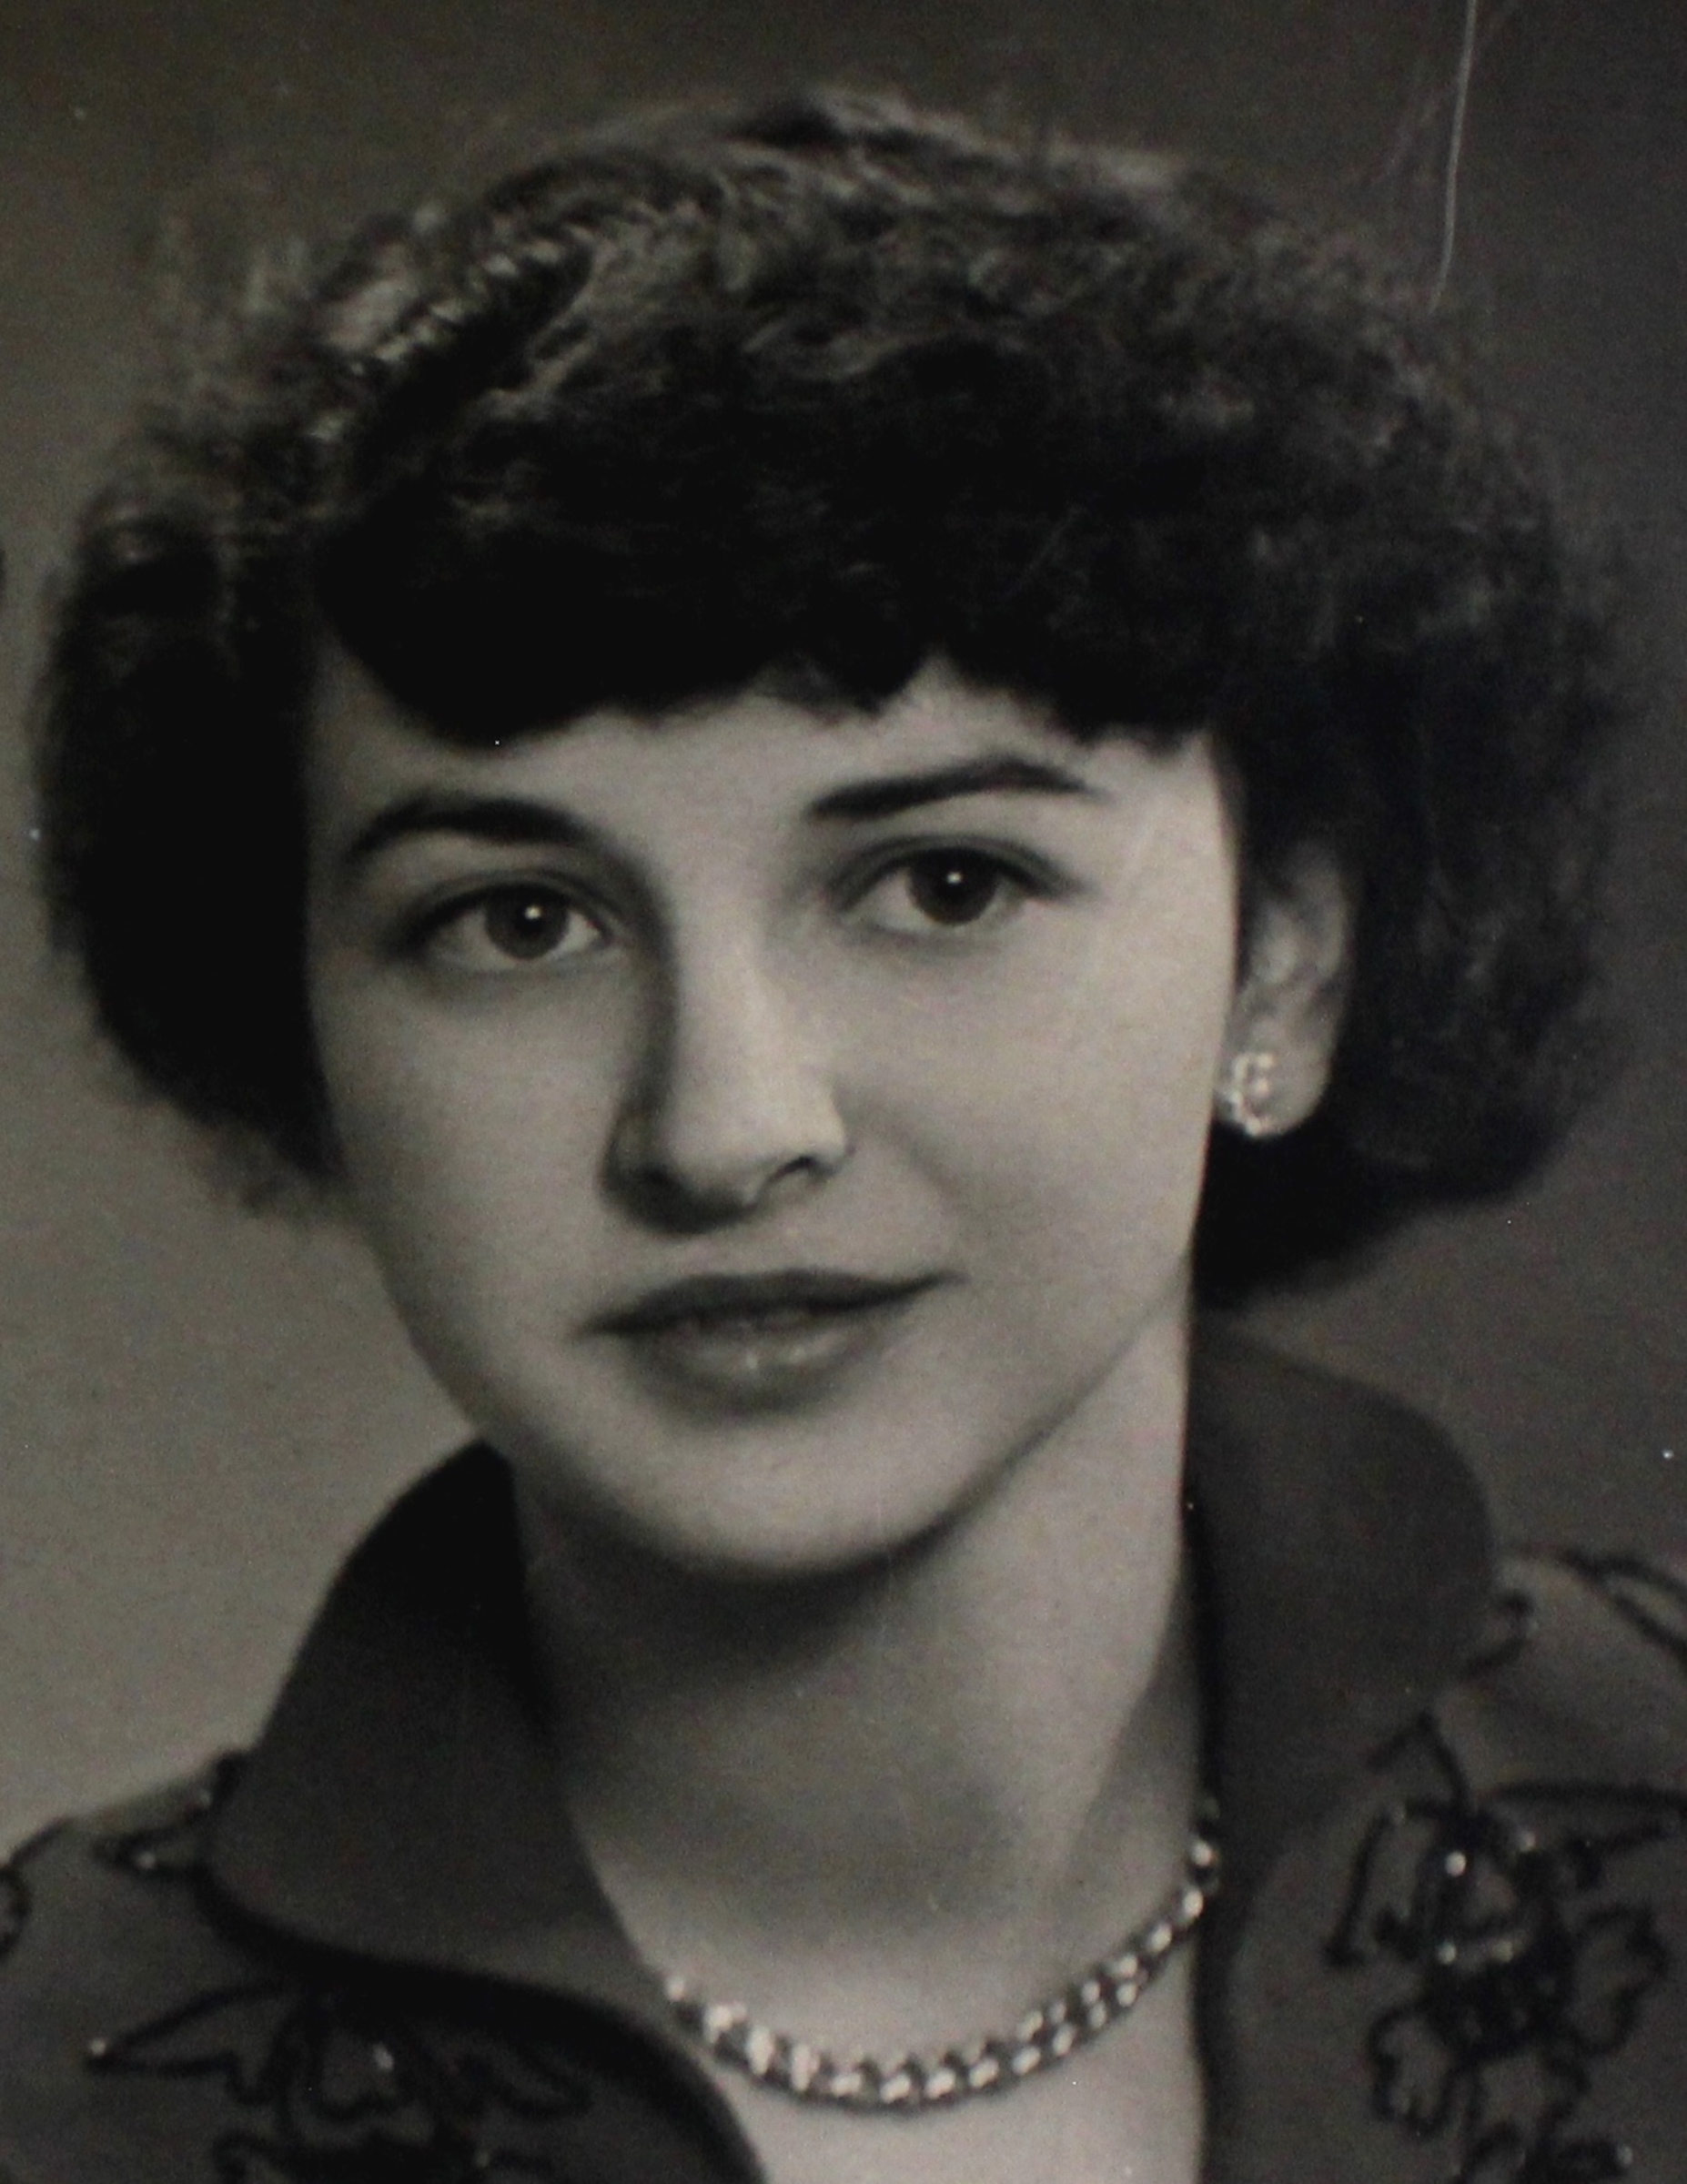 Portrait photo of Anita taken in Klingenthal at the beginning of 1950s